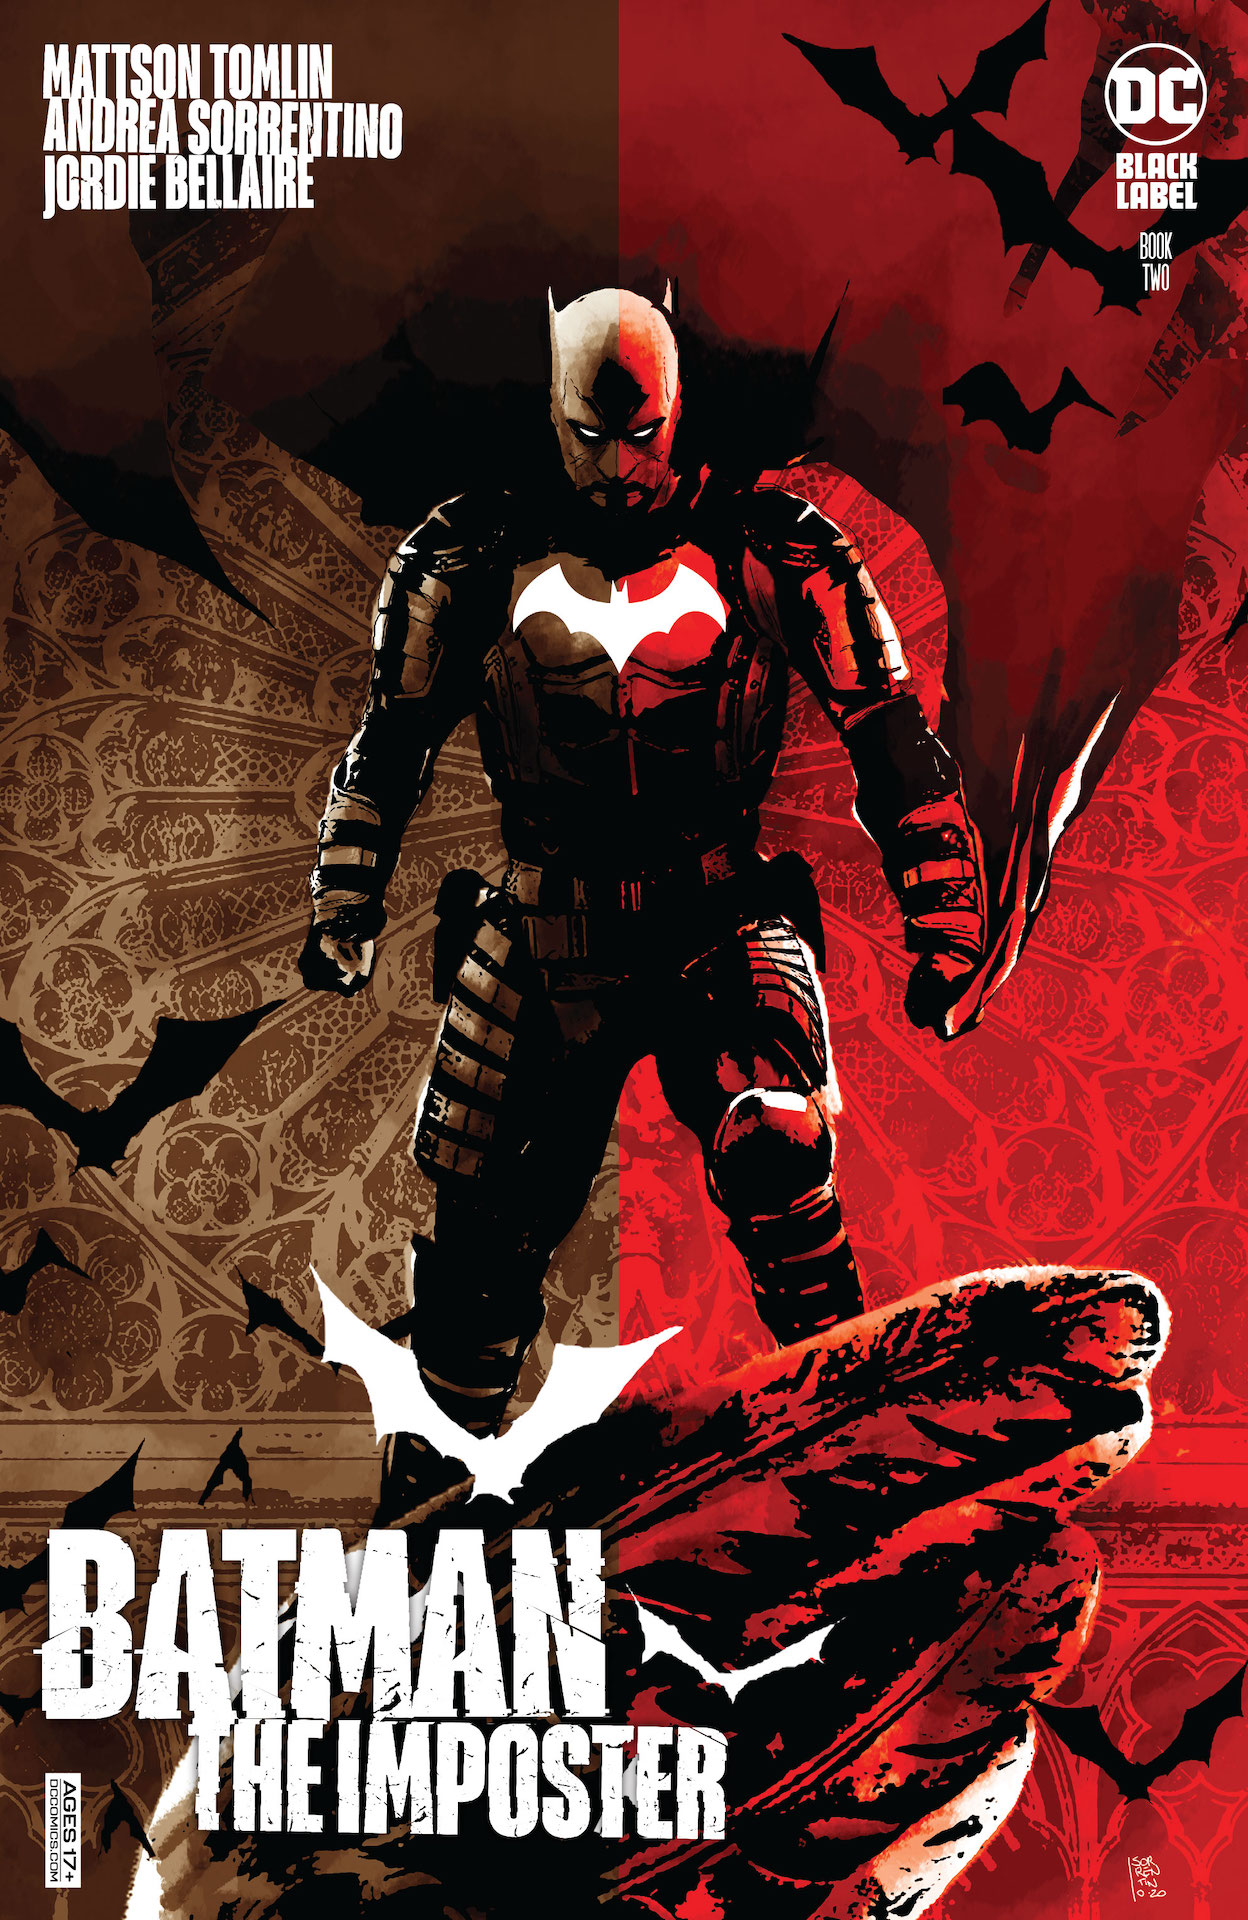 DC Preview: Batman The Imposter #2